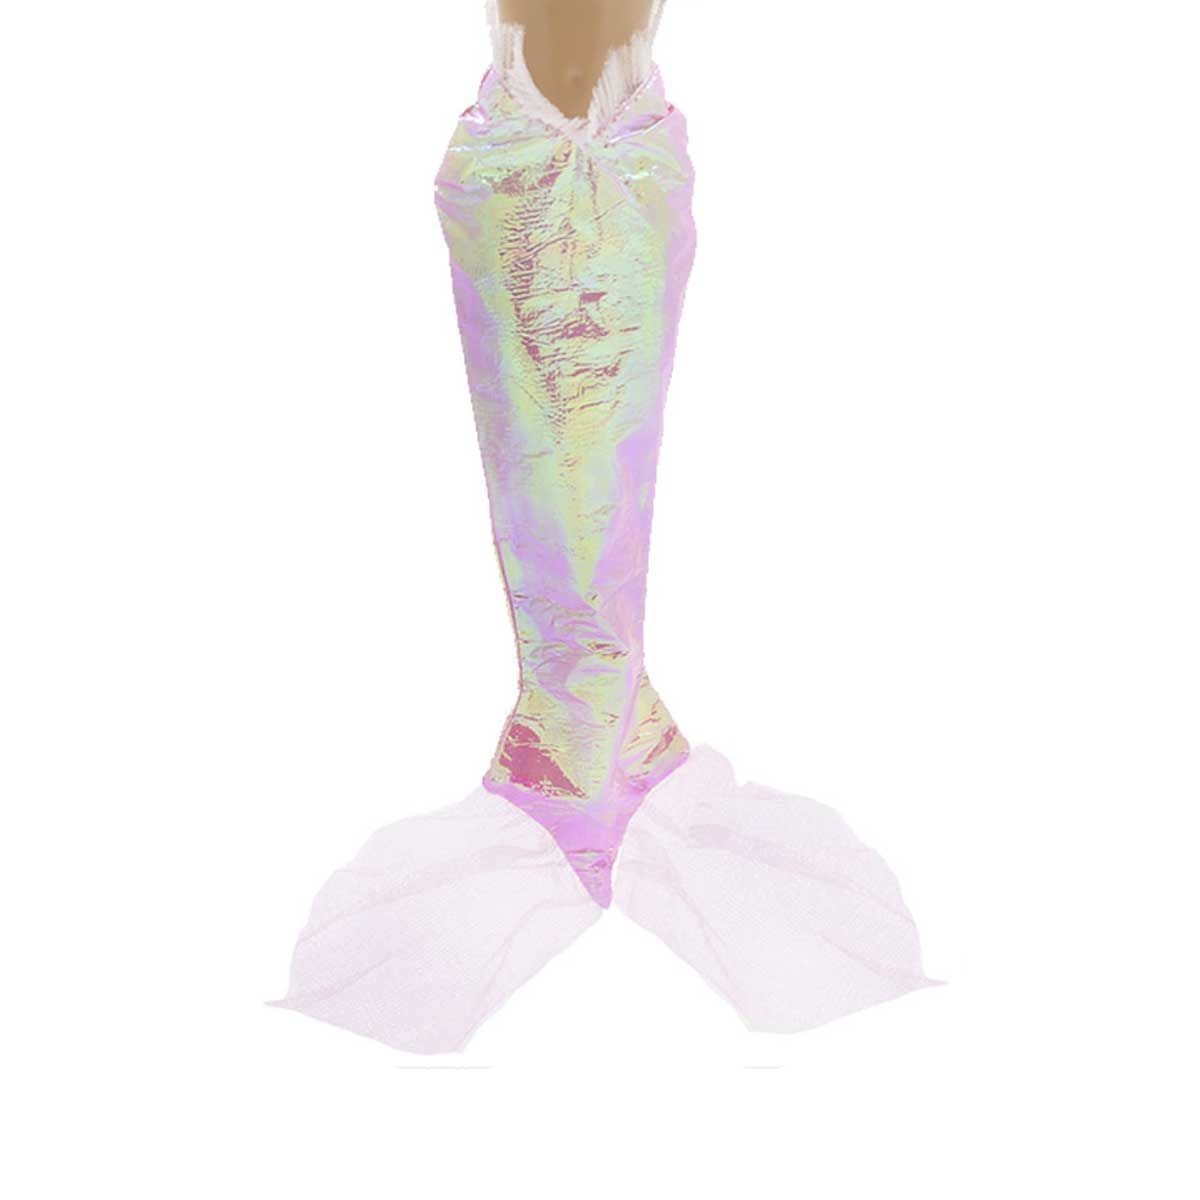 Хвост русалки Dolls Accessories для Барби и кукол 29 см пенал хвост русалки чёрный